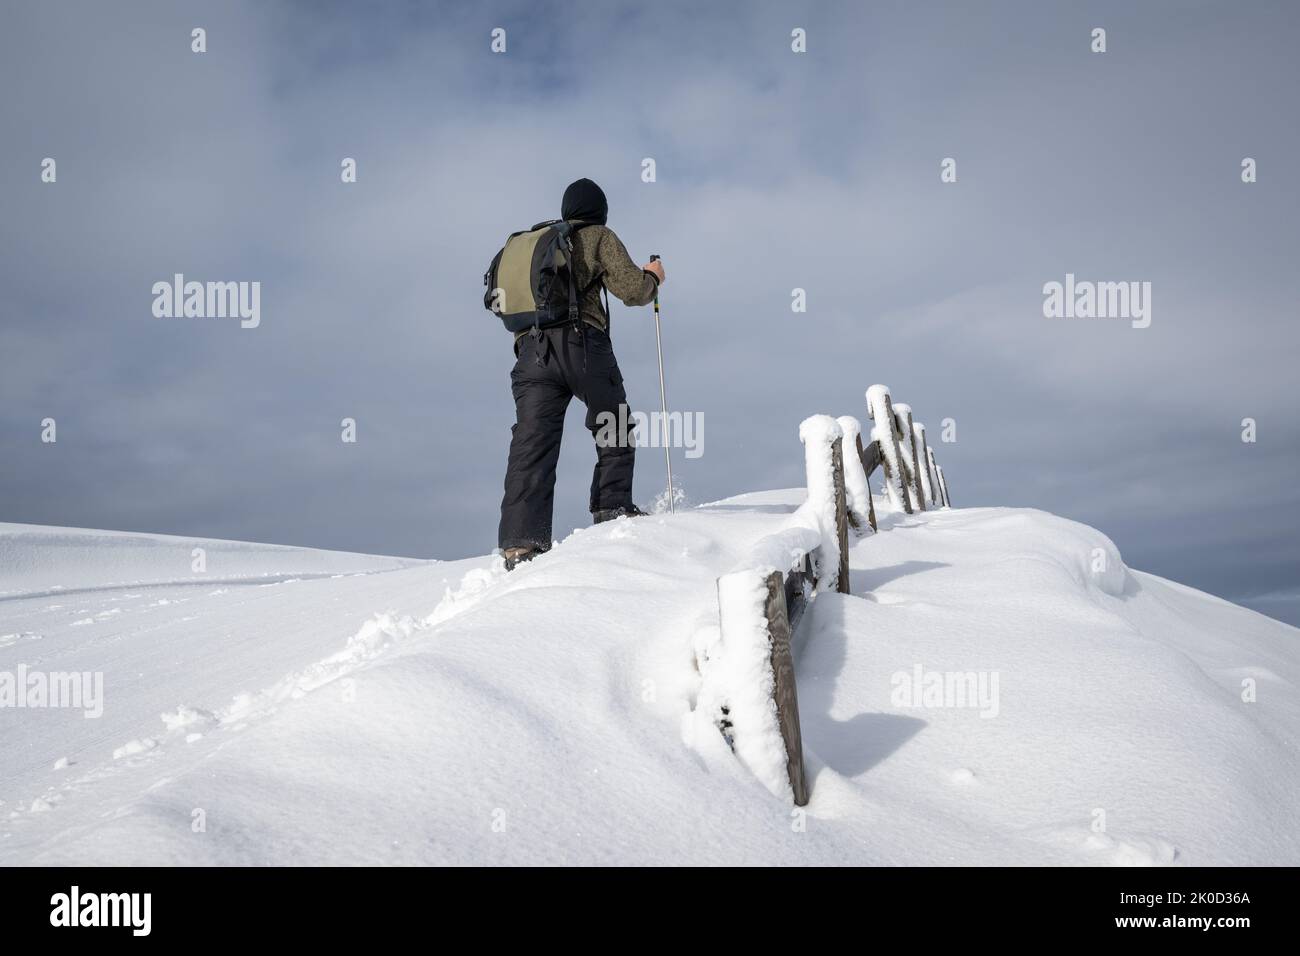 A man walking on the fresh snow, moody sky overhead. Stock Photo